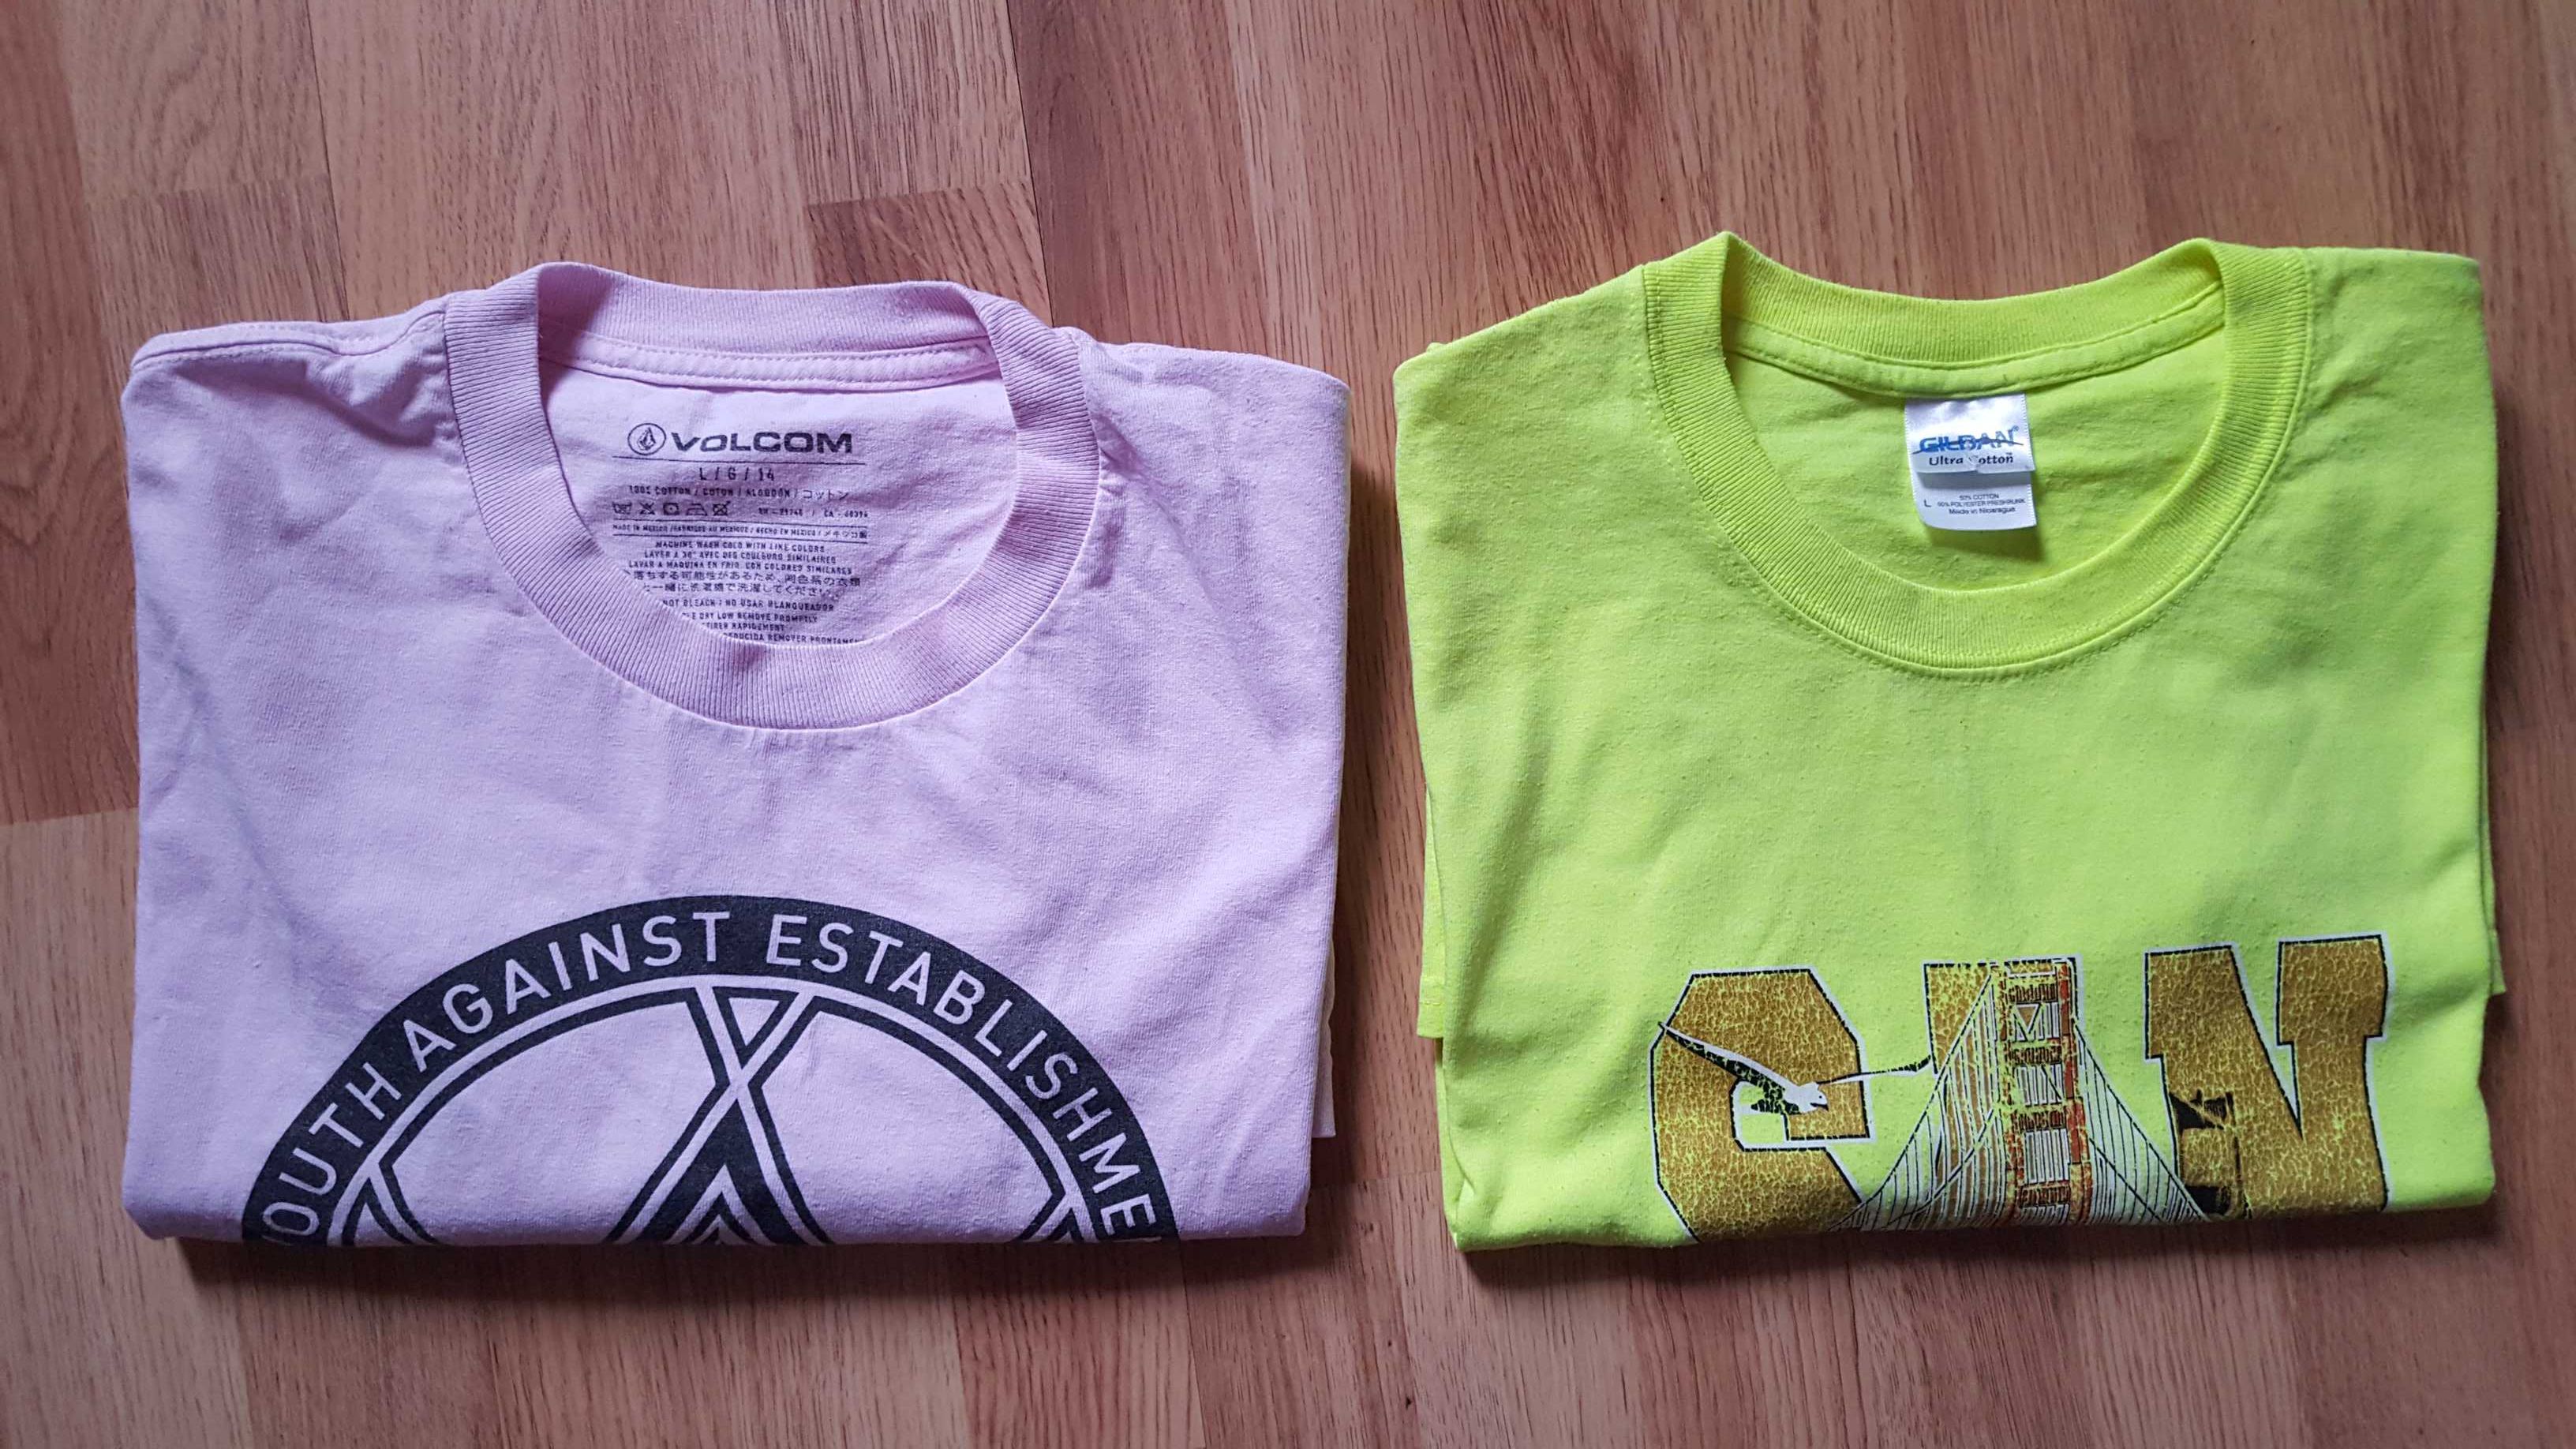 Kolorowe t-shirty neon, różowy, rozmiar L i XL - 2 szt. plus gratis